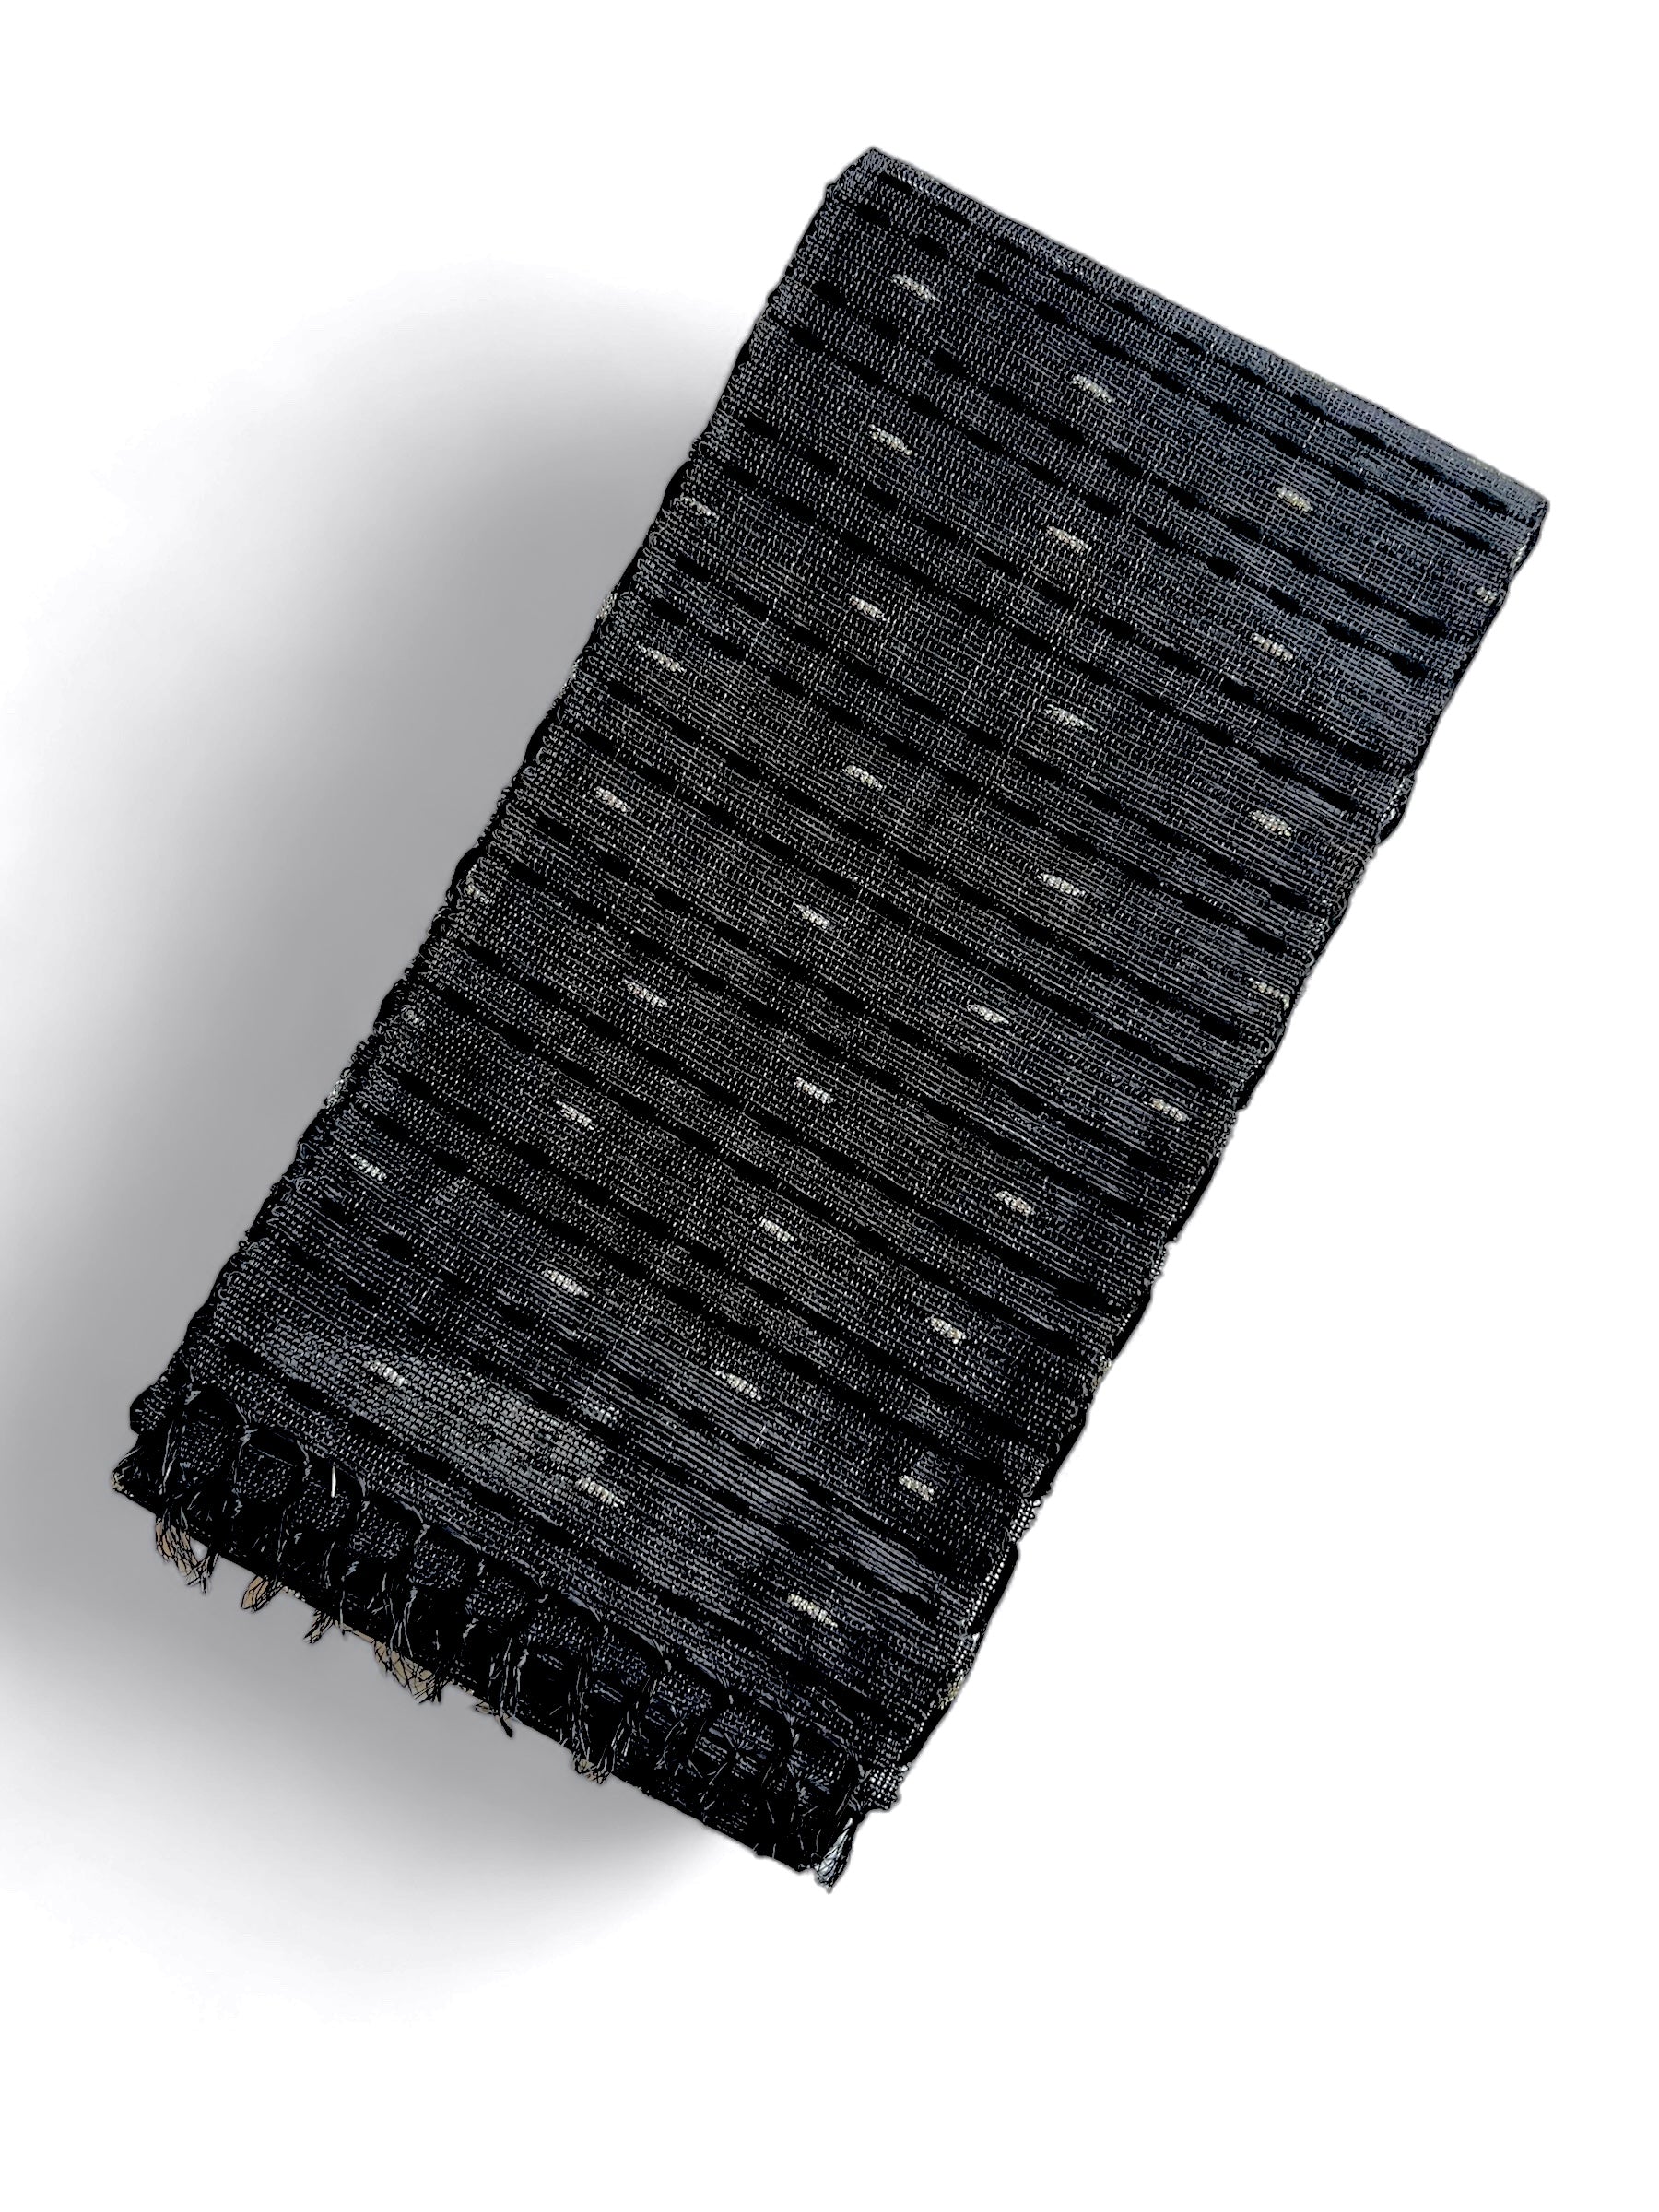 Basho-dan weave, single layer, black/silver dots (Komutaya Genbei): half-width obi